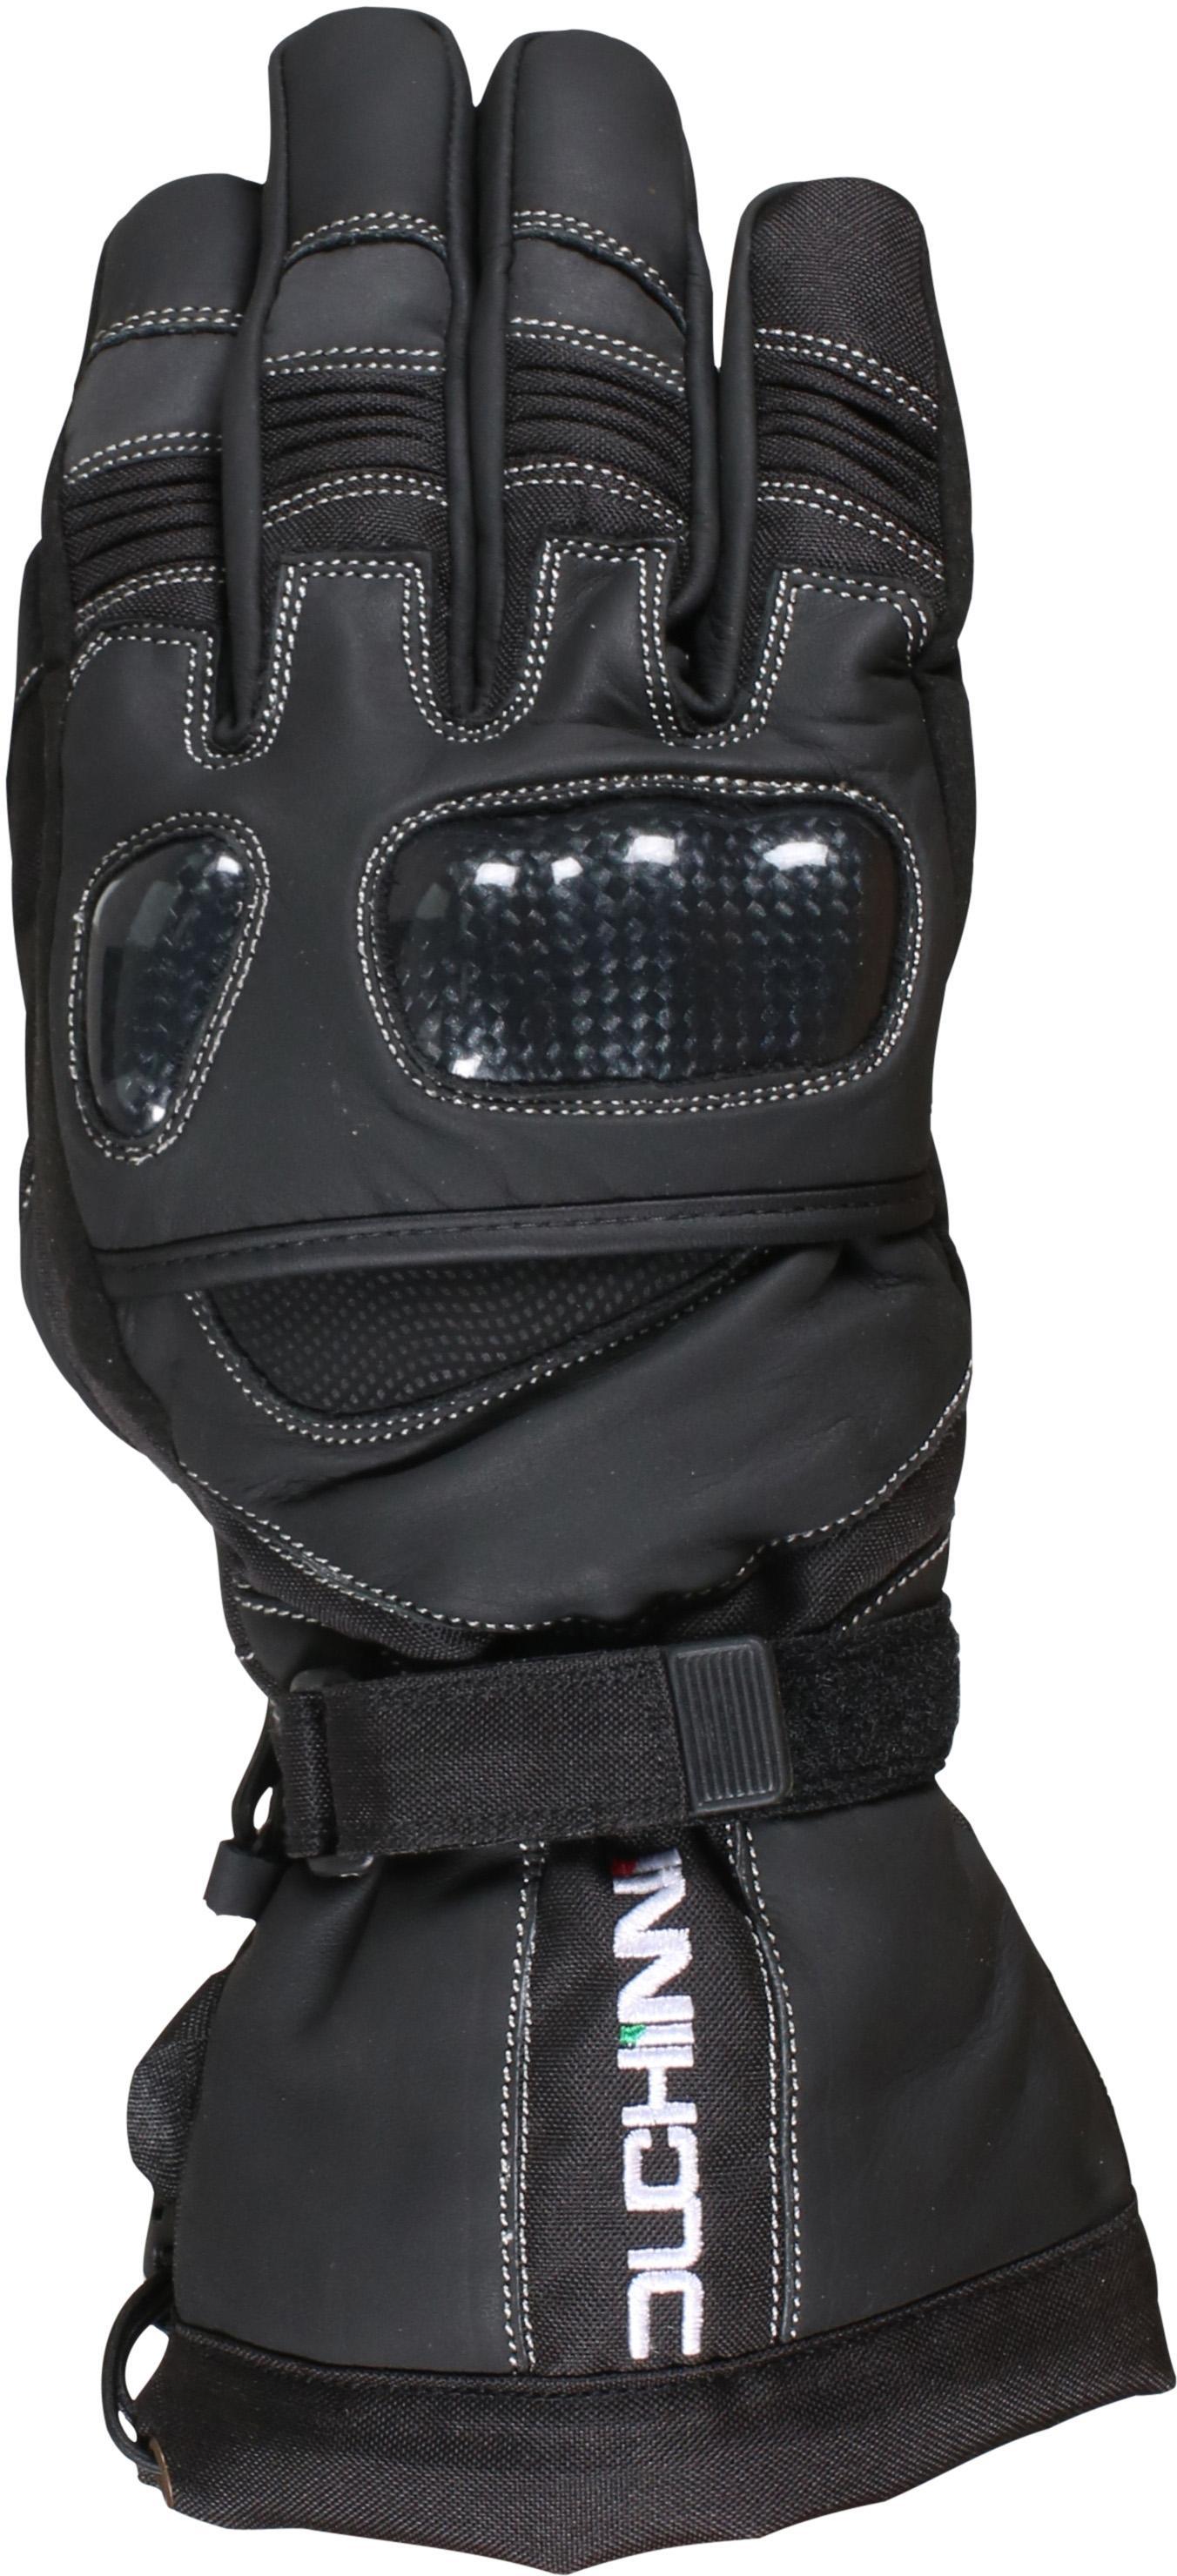 Duchinni Yukon Motorcycle Gloves - Black, S